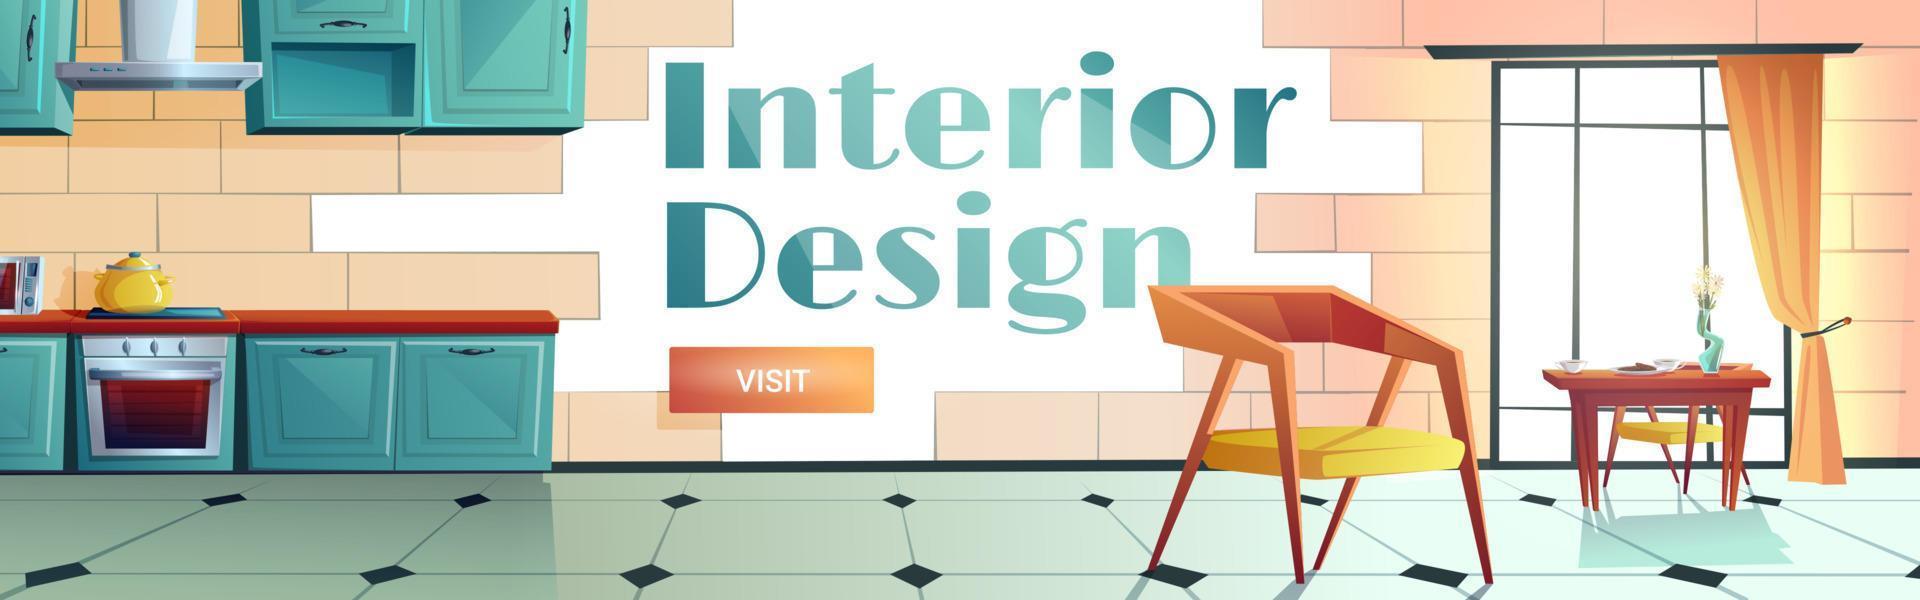 banner web de dibujos animados de diseño de interiores. cocina casera vector